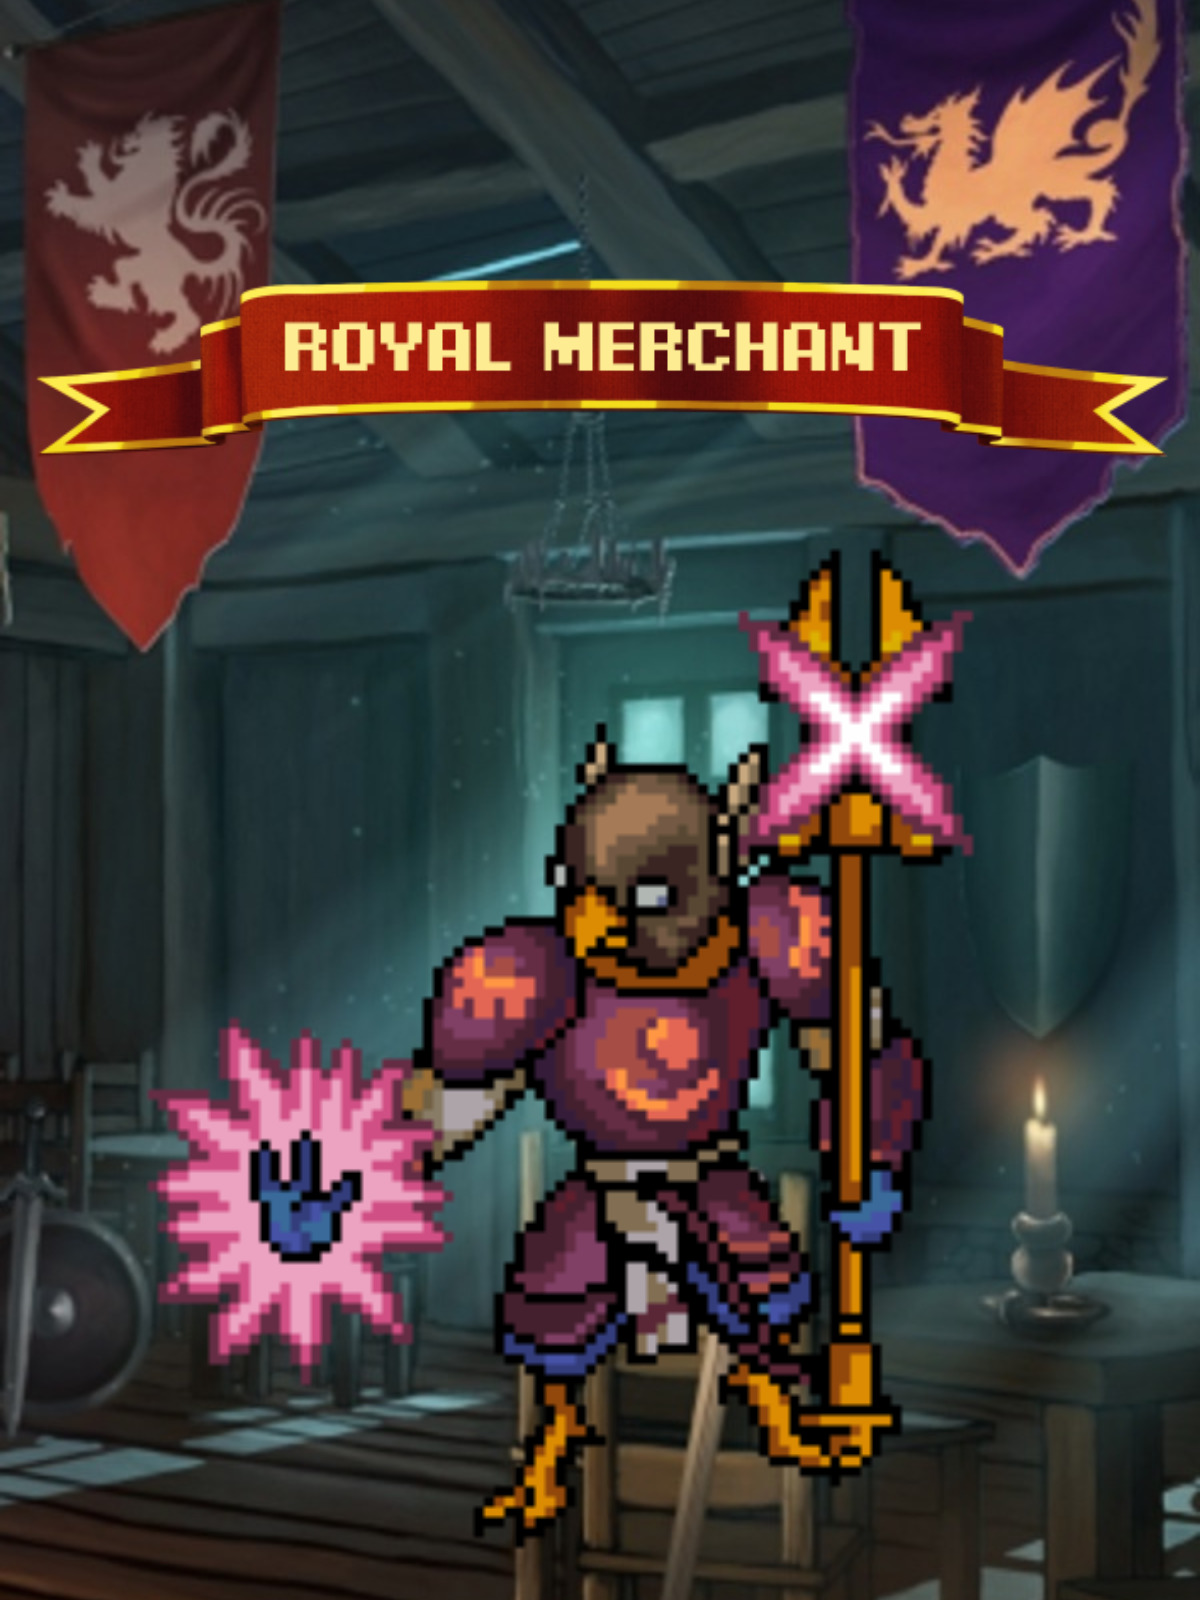 Royal Merchant